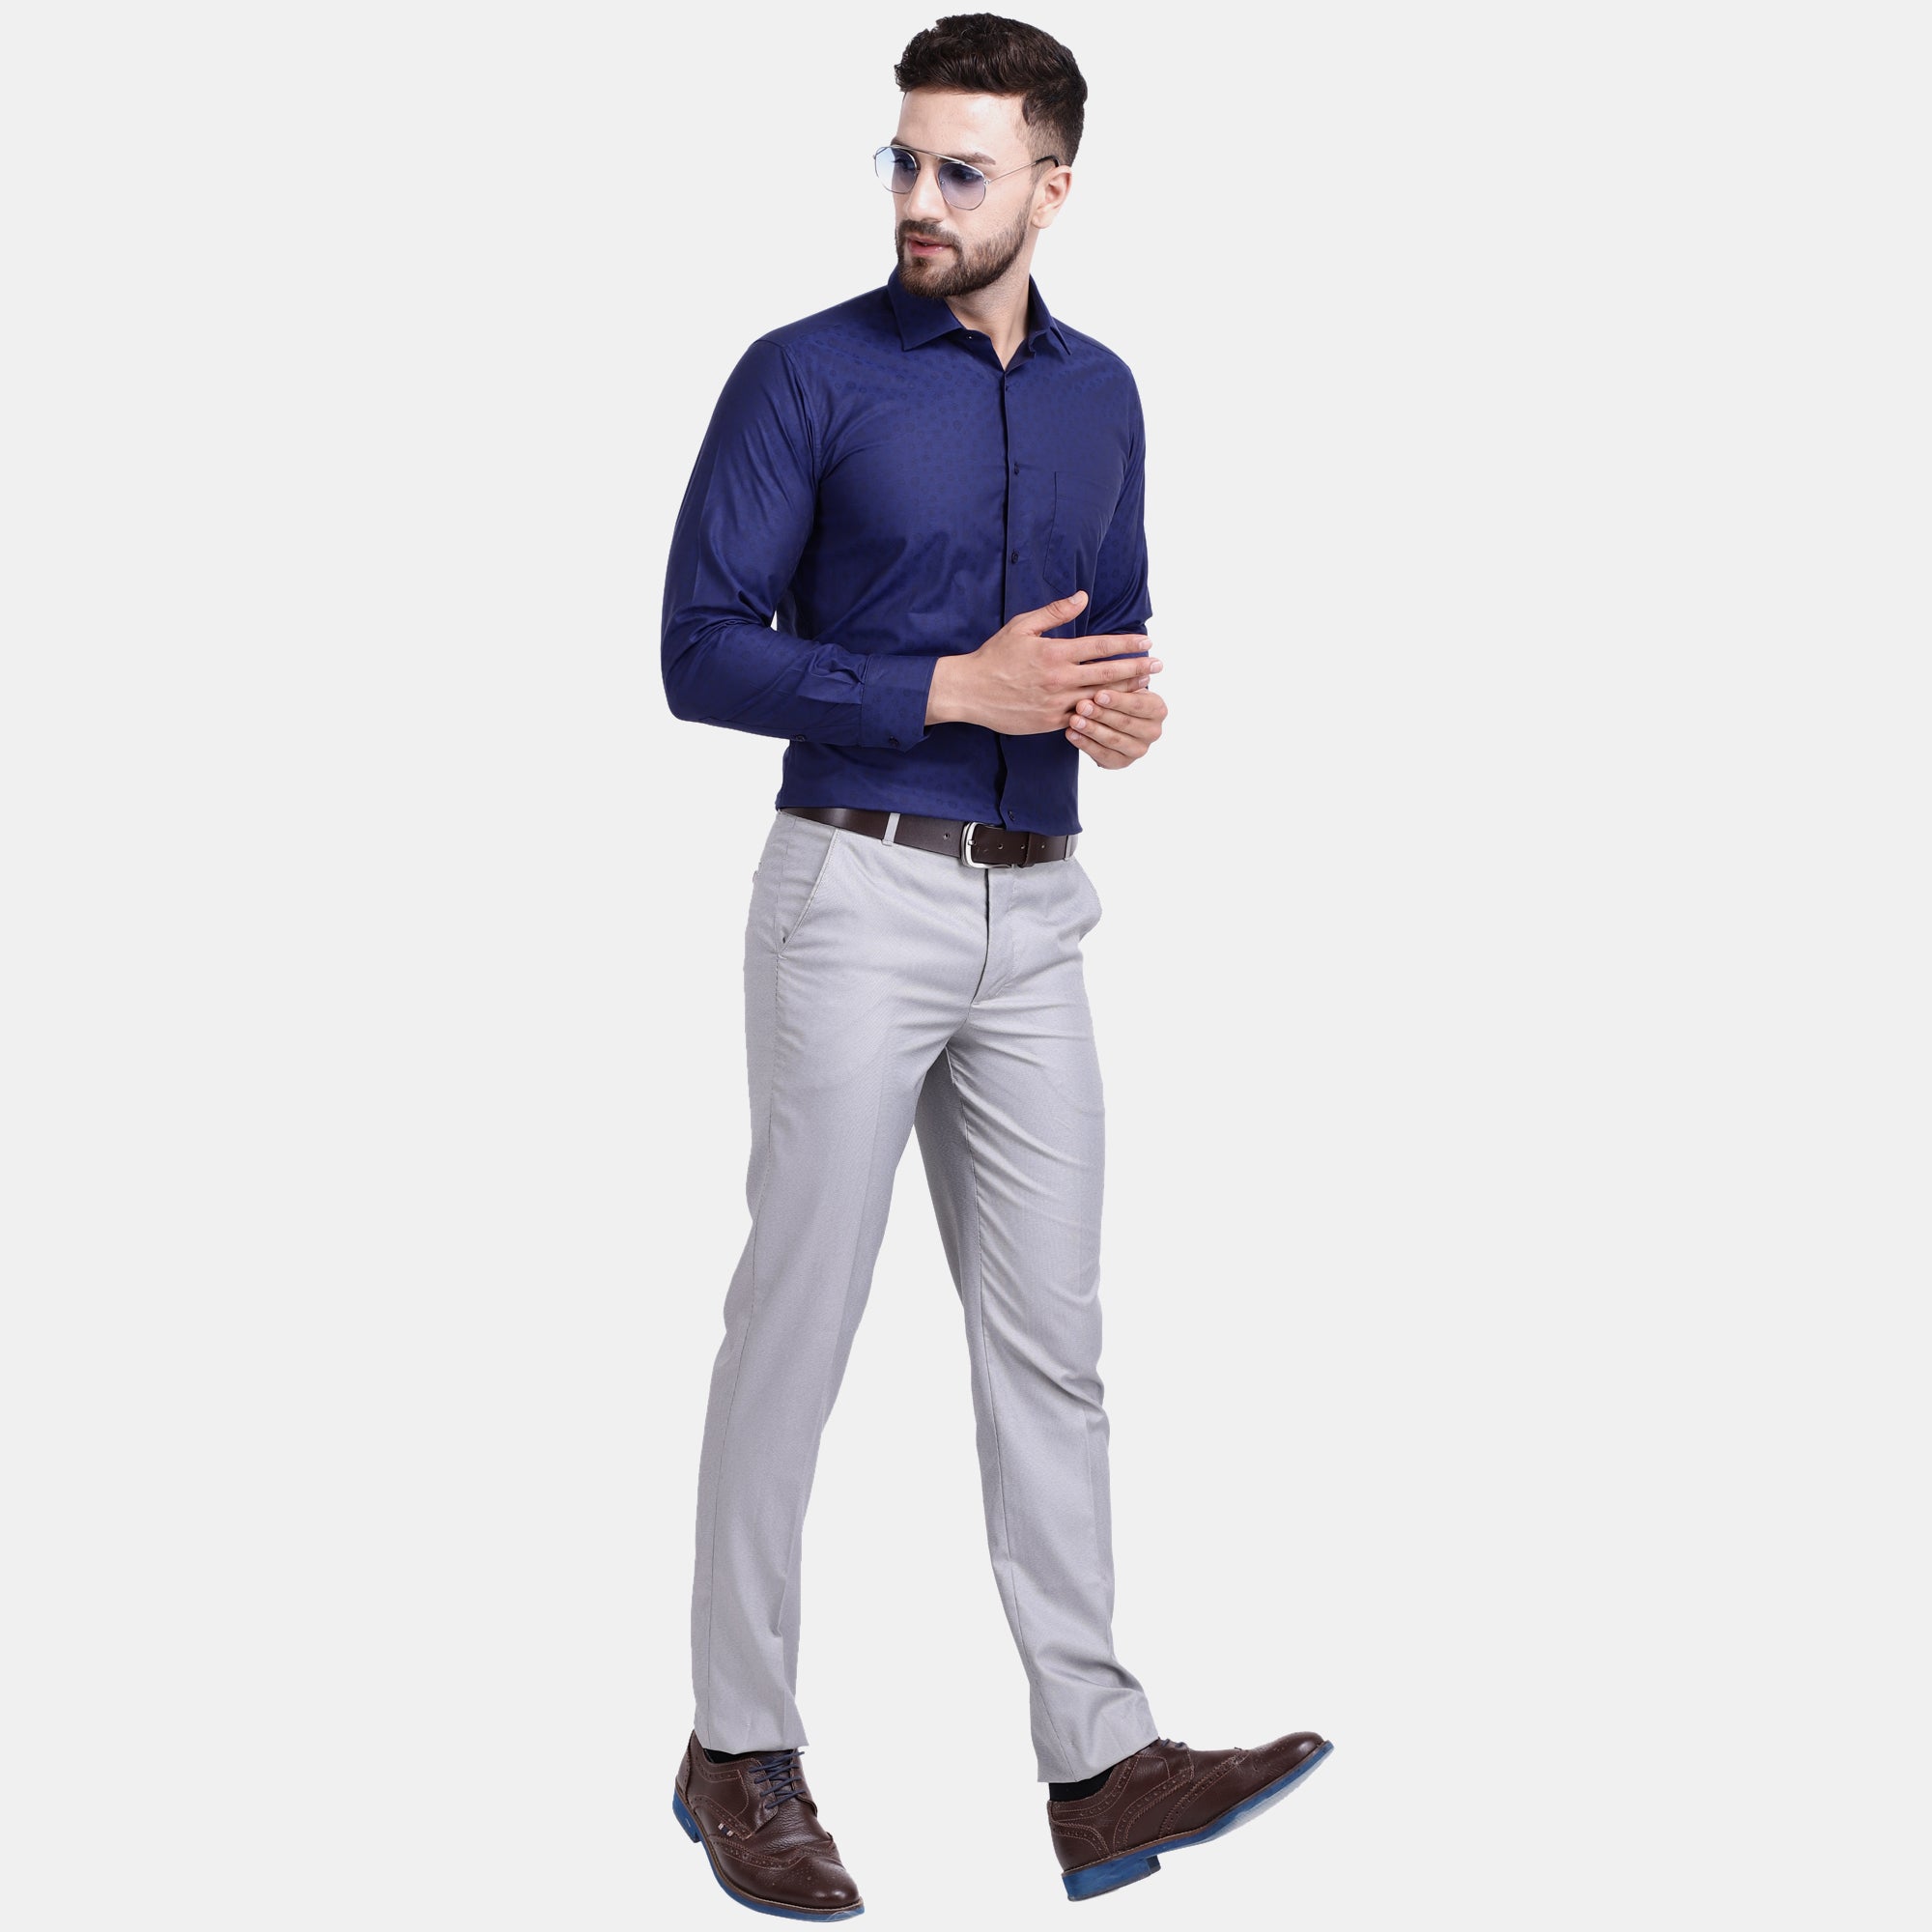 Men's Luthai Supima Mercerised Cotton Subtle Circle Textured Jacquard Design Regular Fit Shirt